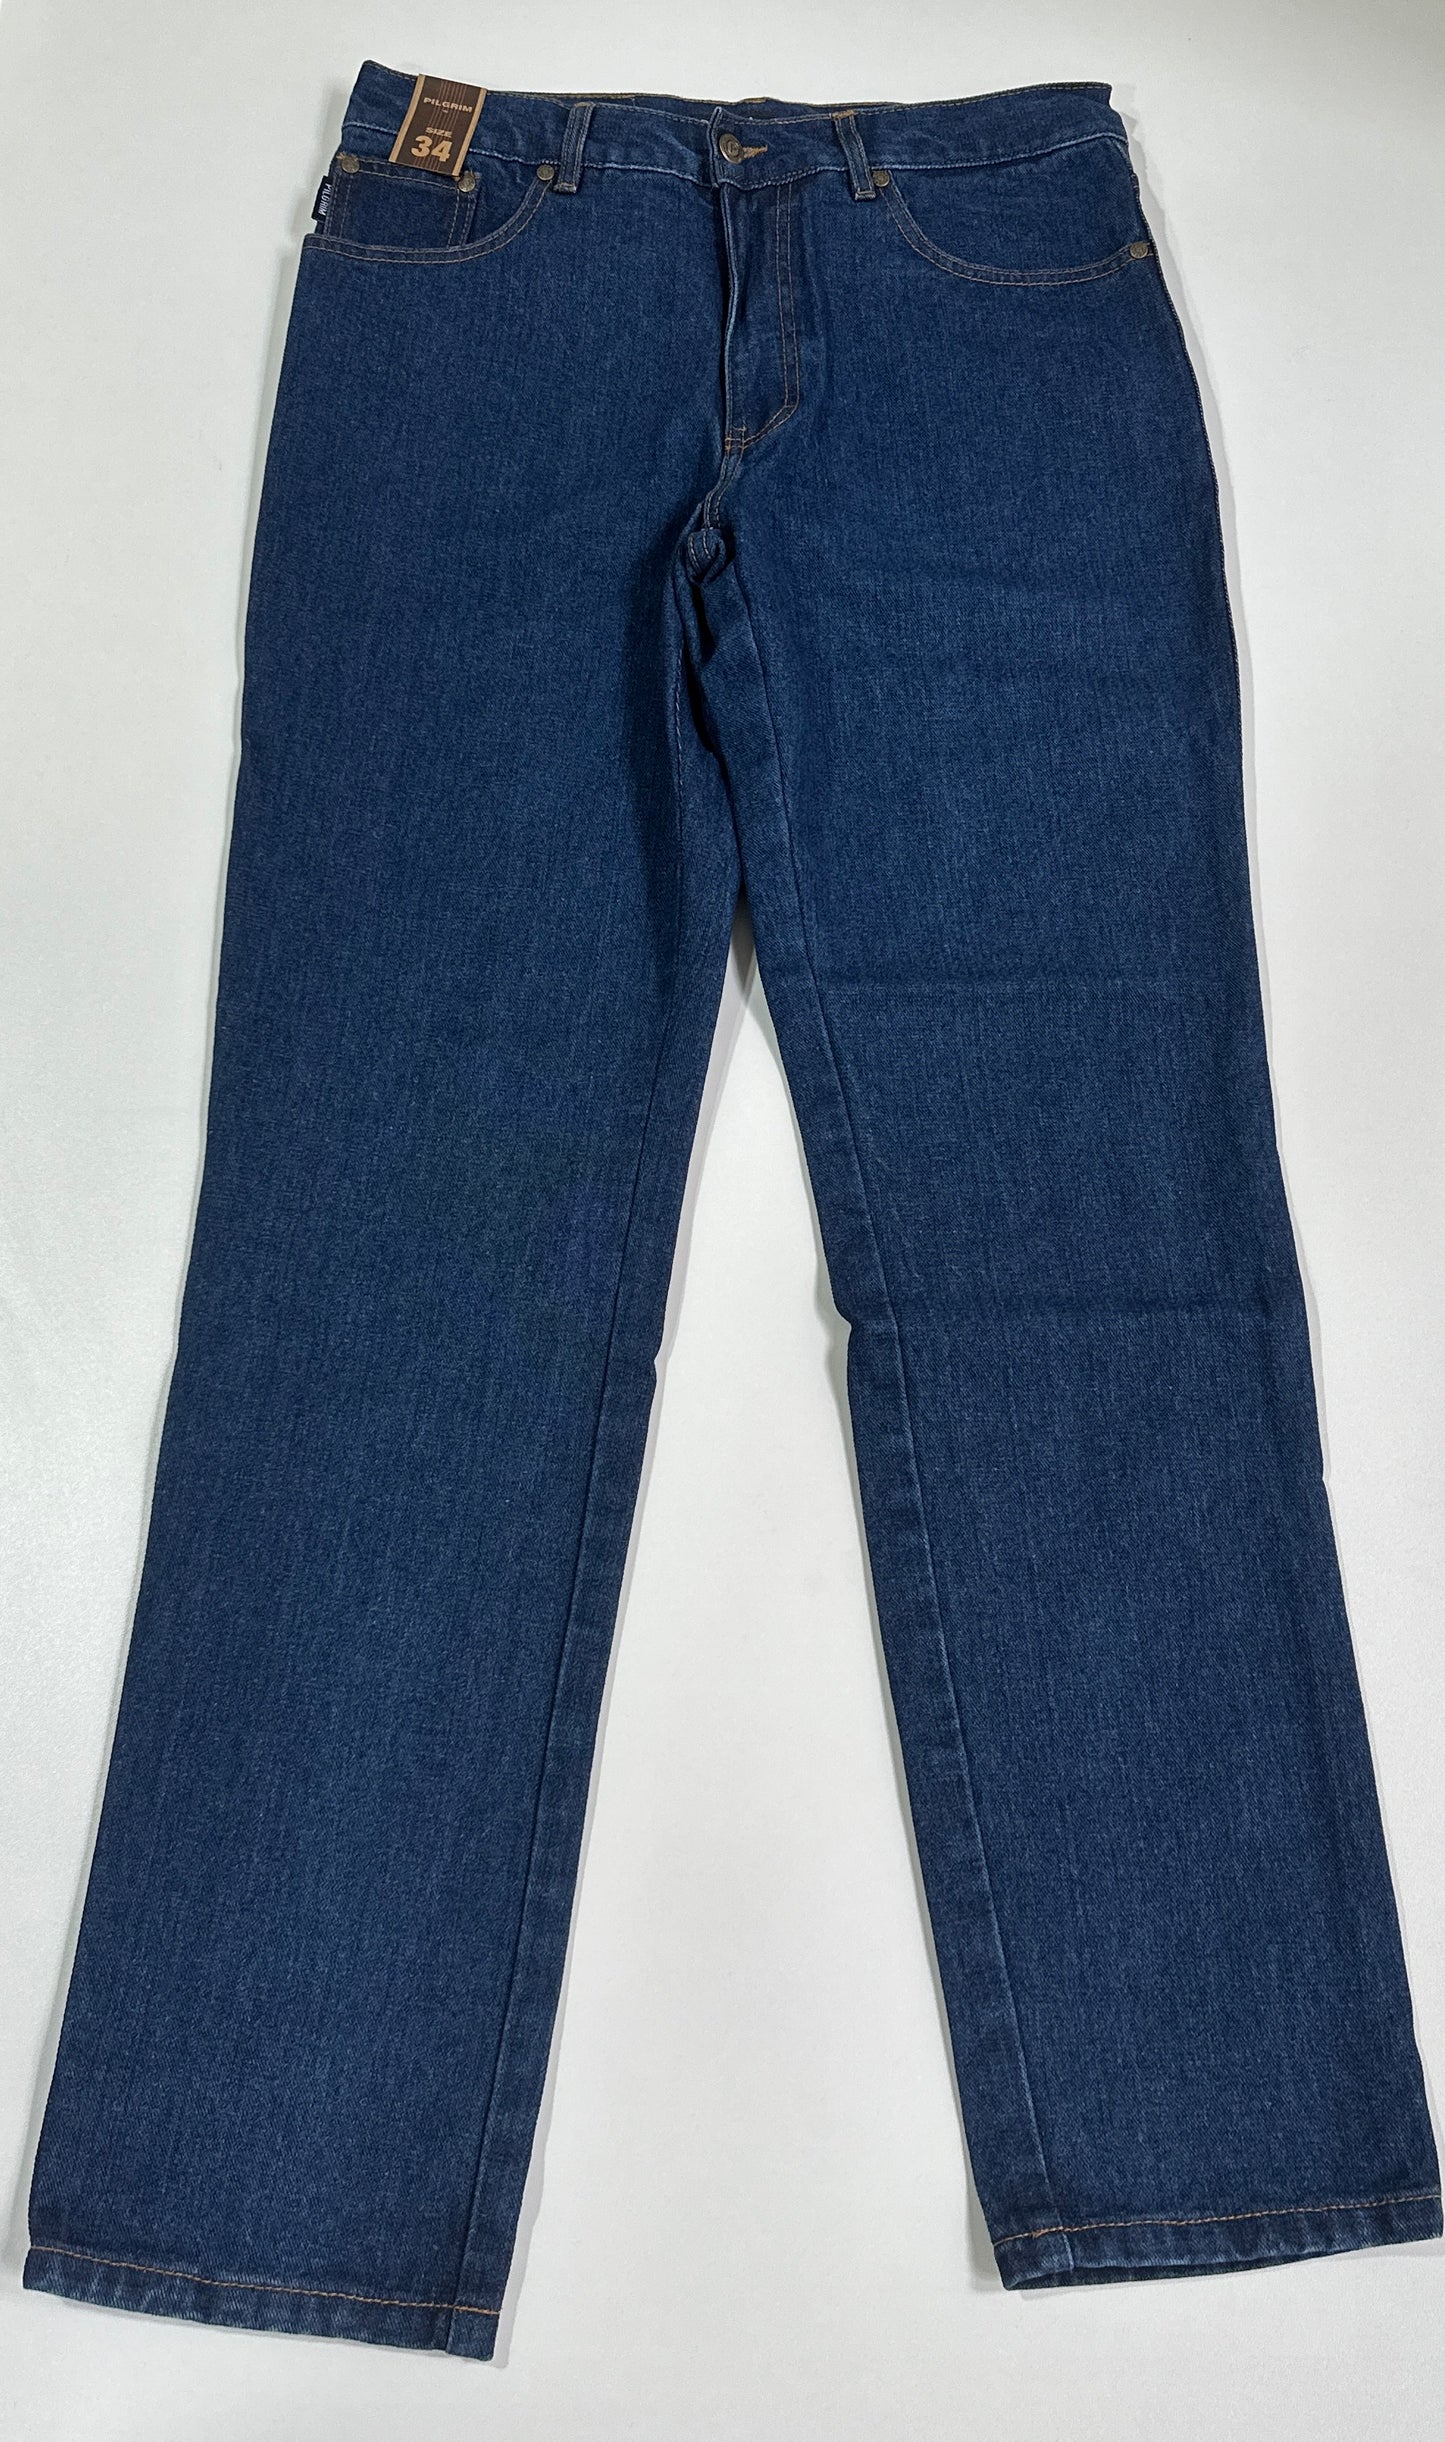 Mens 5 Pocket Western Jean, Non-stretch, Short Leg, Indigo Stonewash